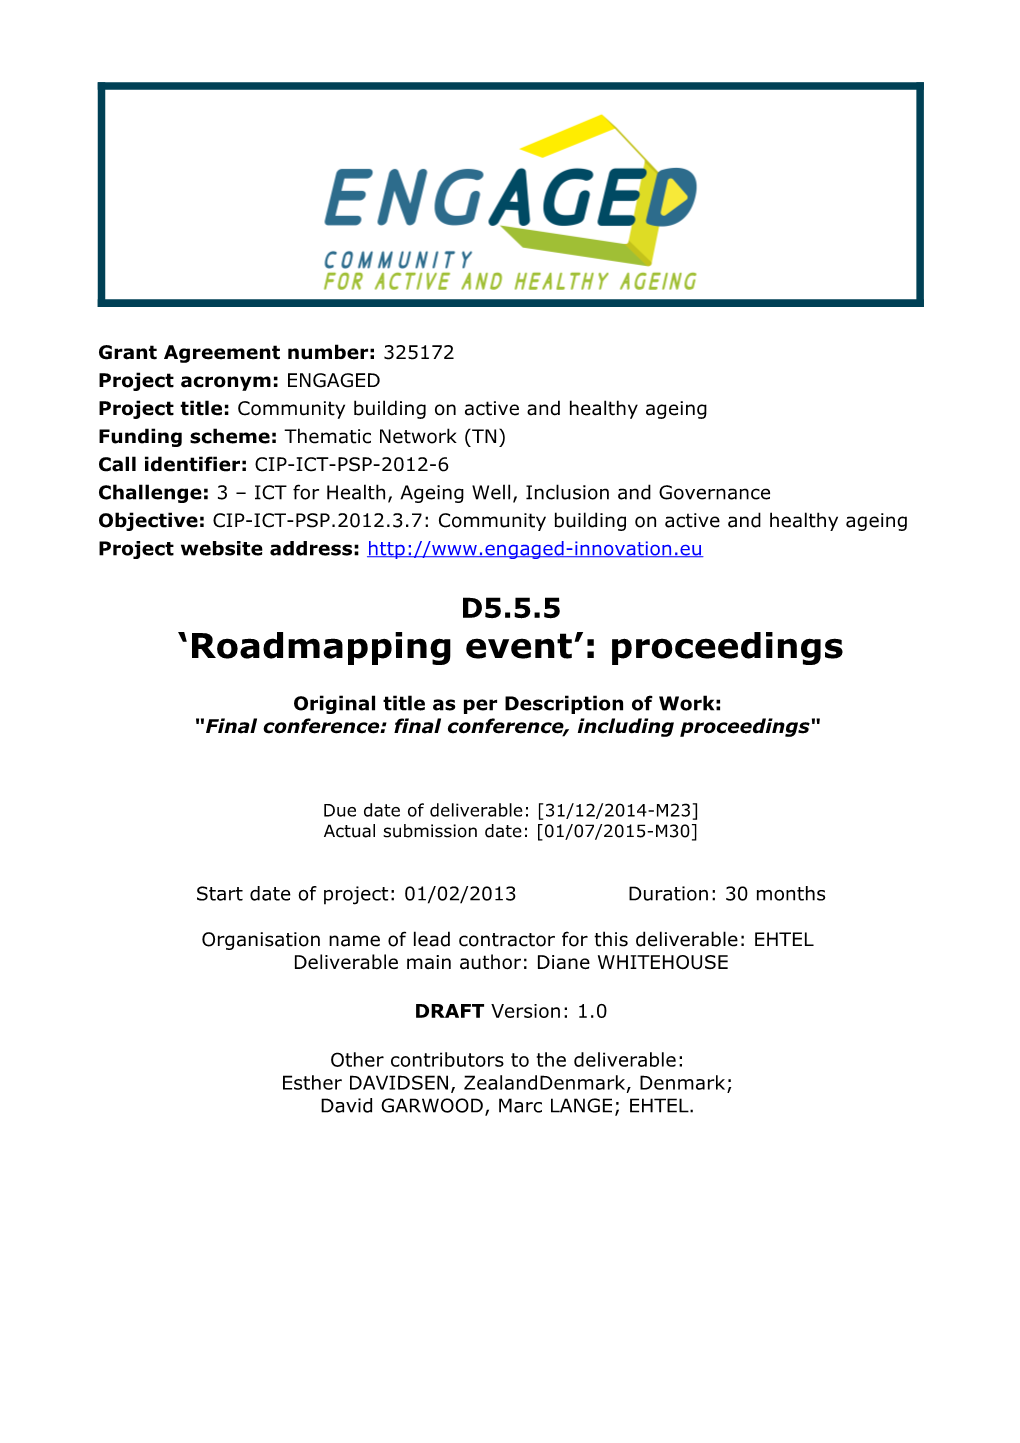 D5.5.5 Roadmapping Event : Proceedings